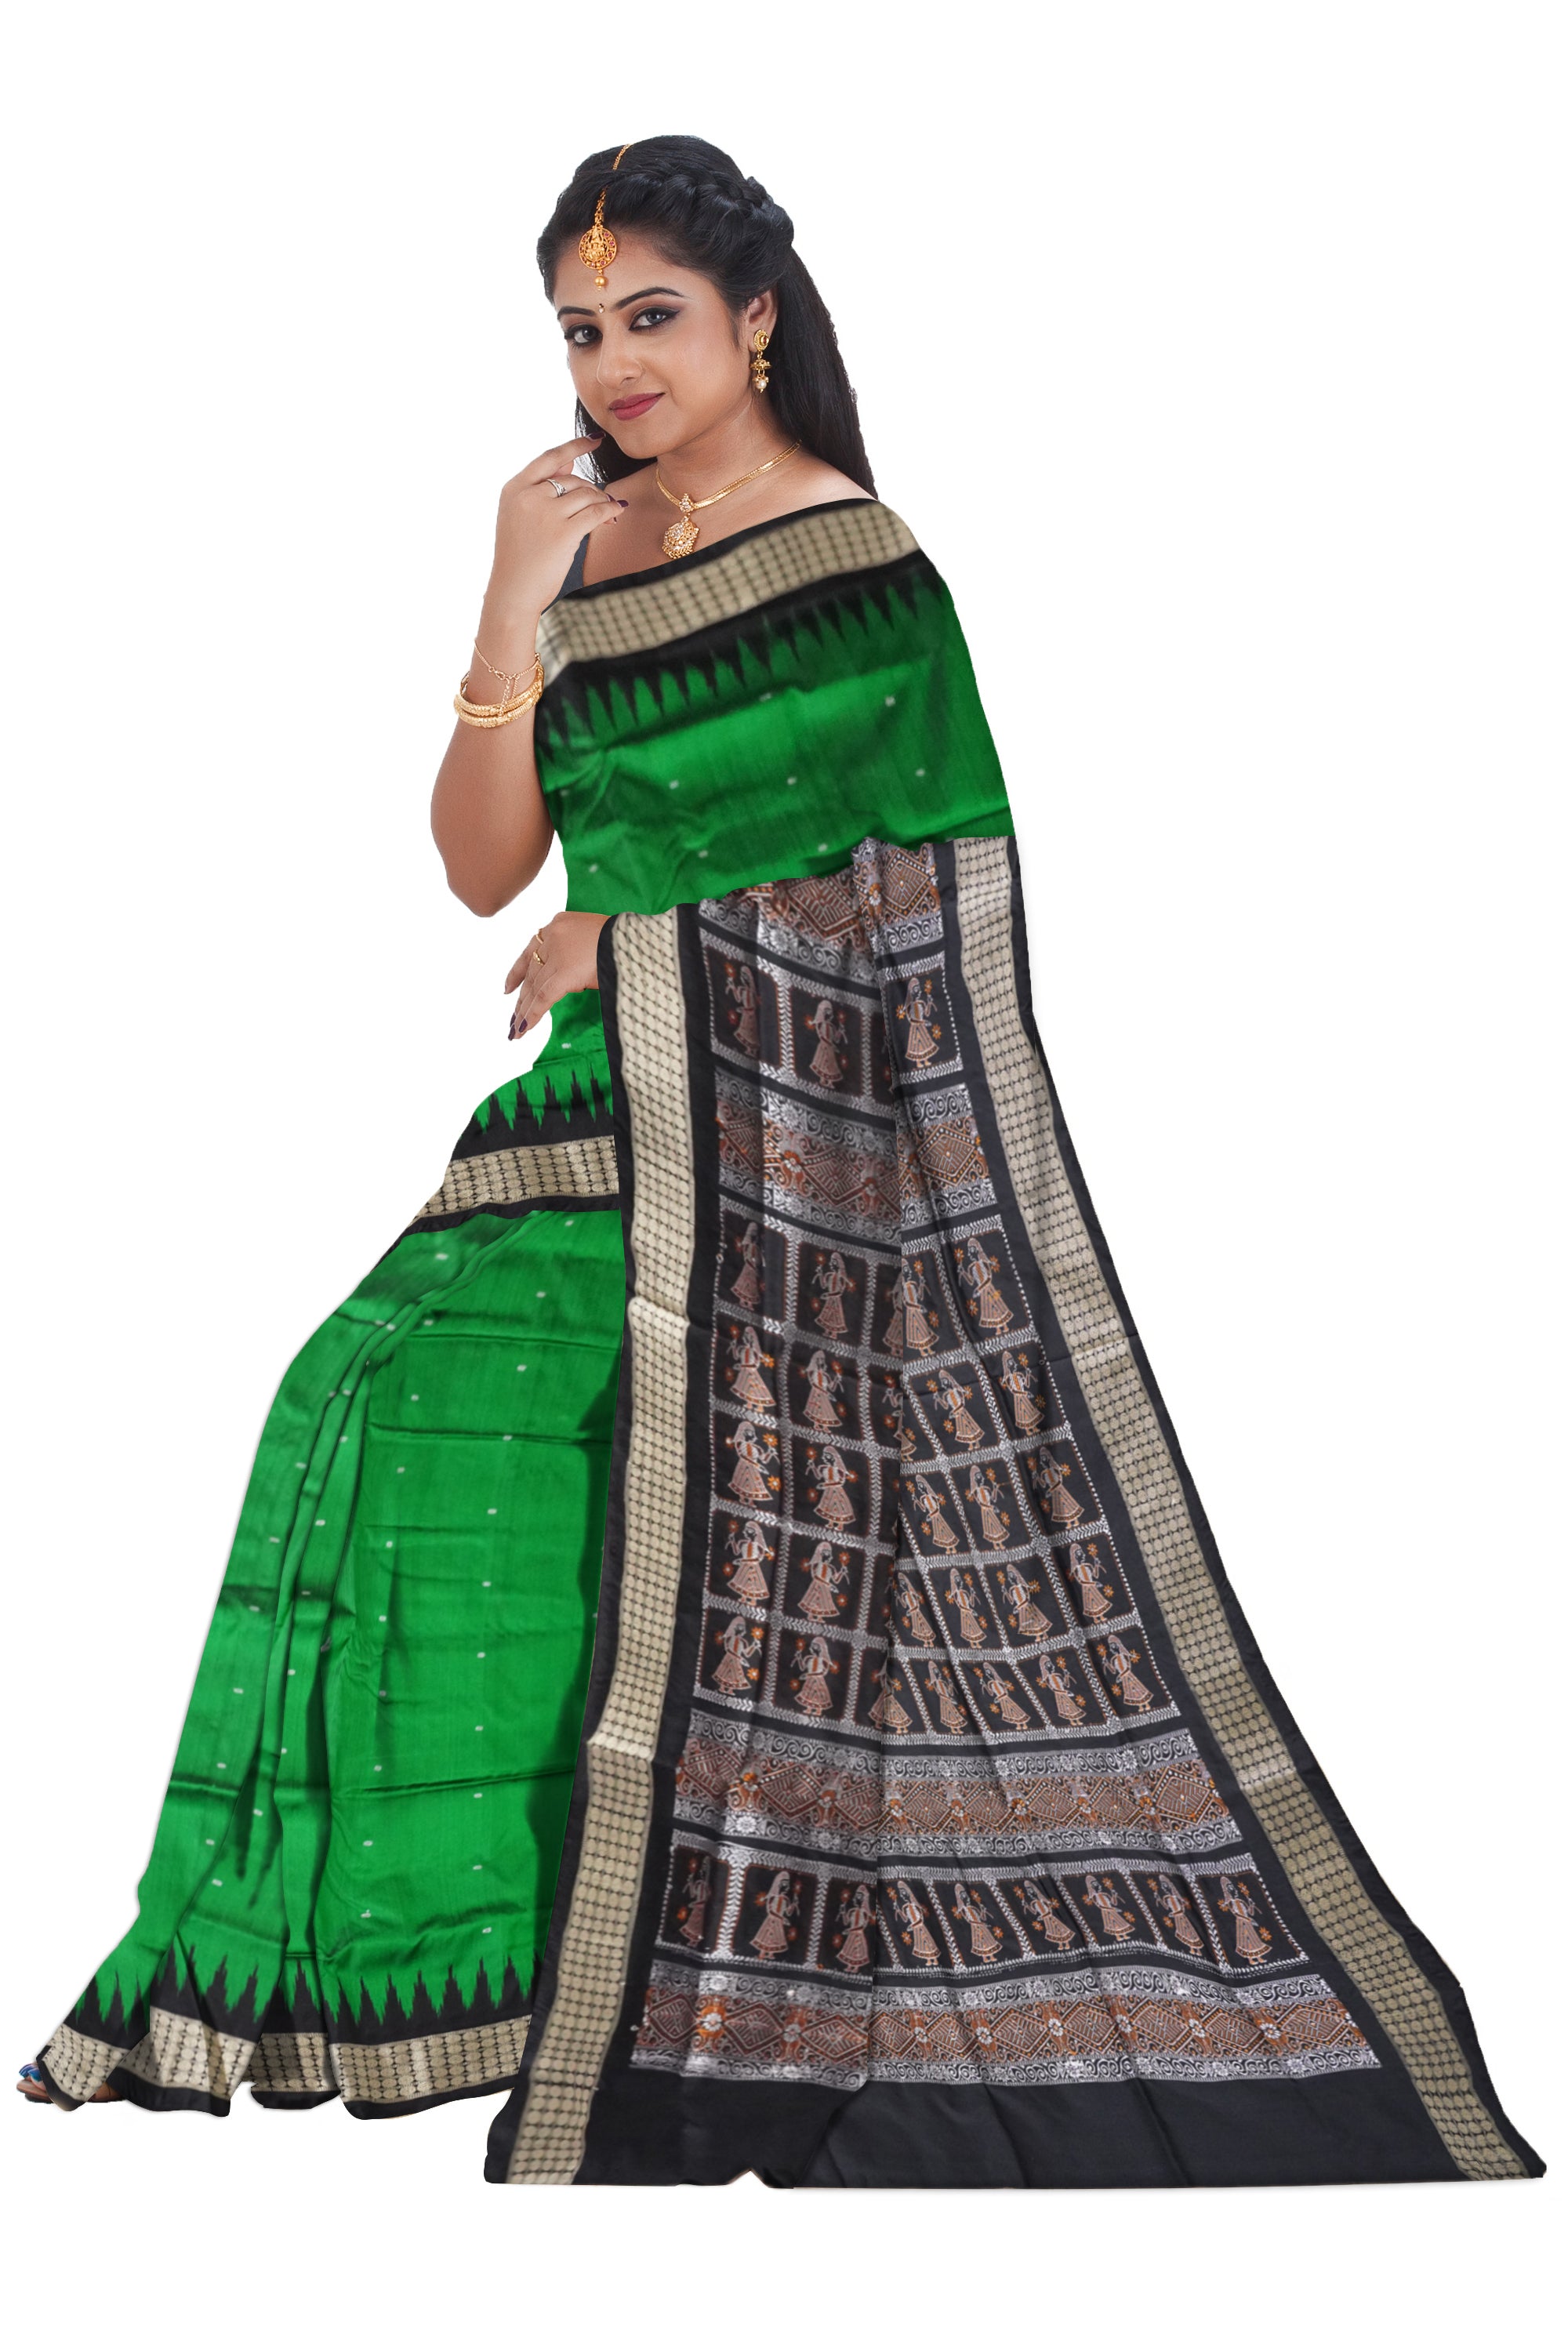 Green and black pata saree, plain body, doll pattern pallu. - Koshali Arts & Crafts Enterprise